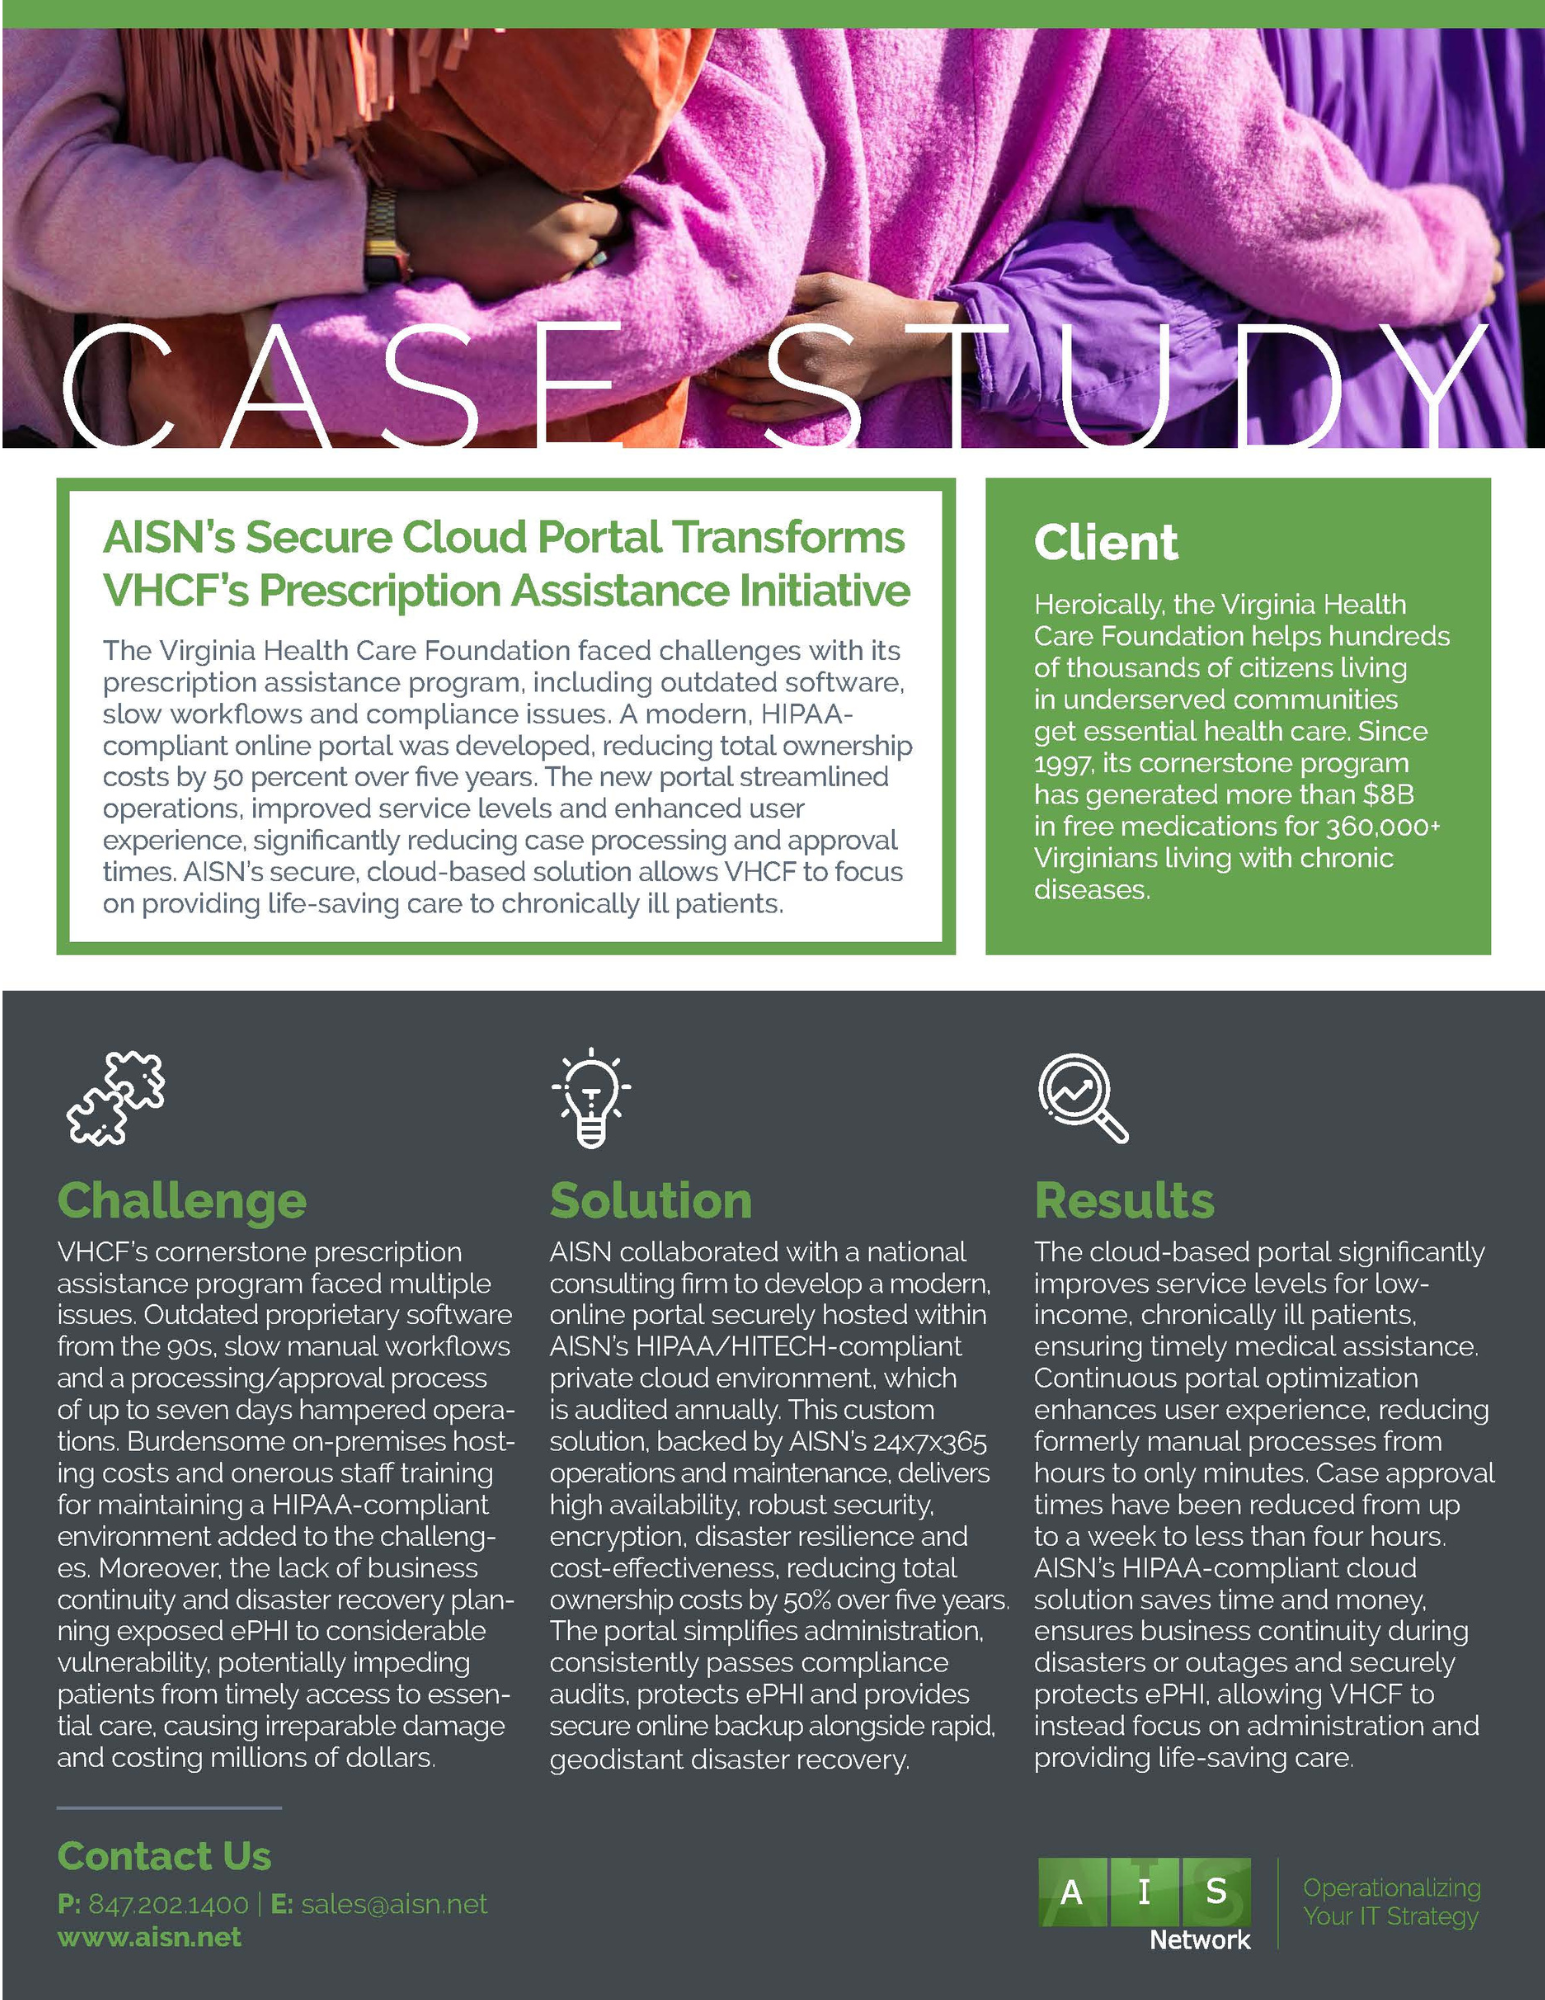 AISN's Secure Cloud Portal Transforms VHCF's Prescription Assistance Initiative